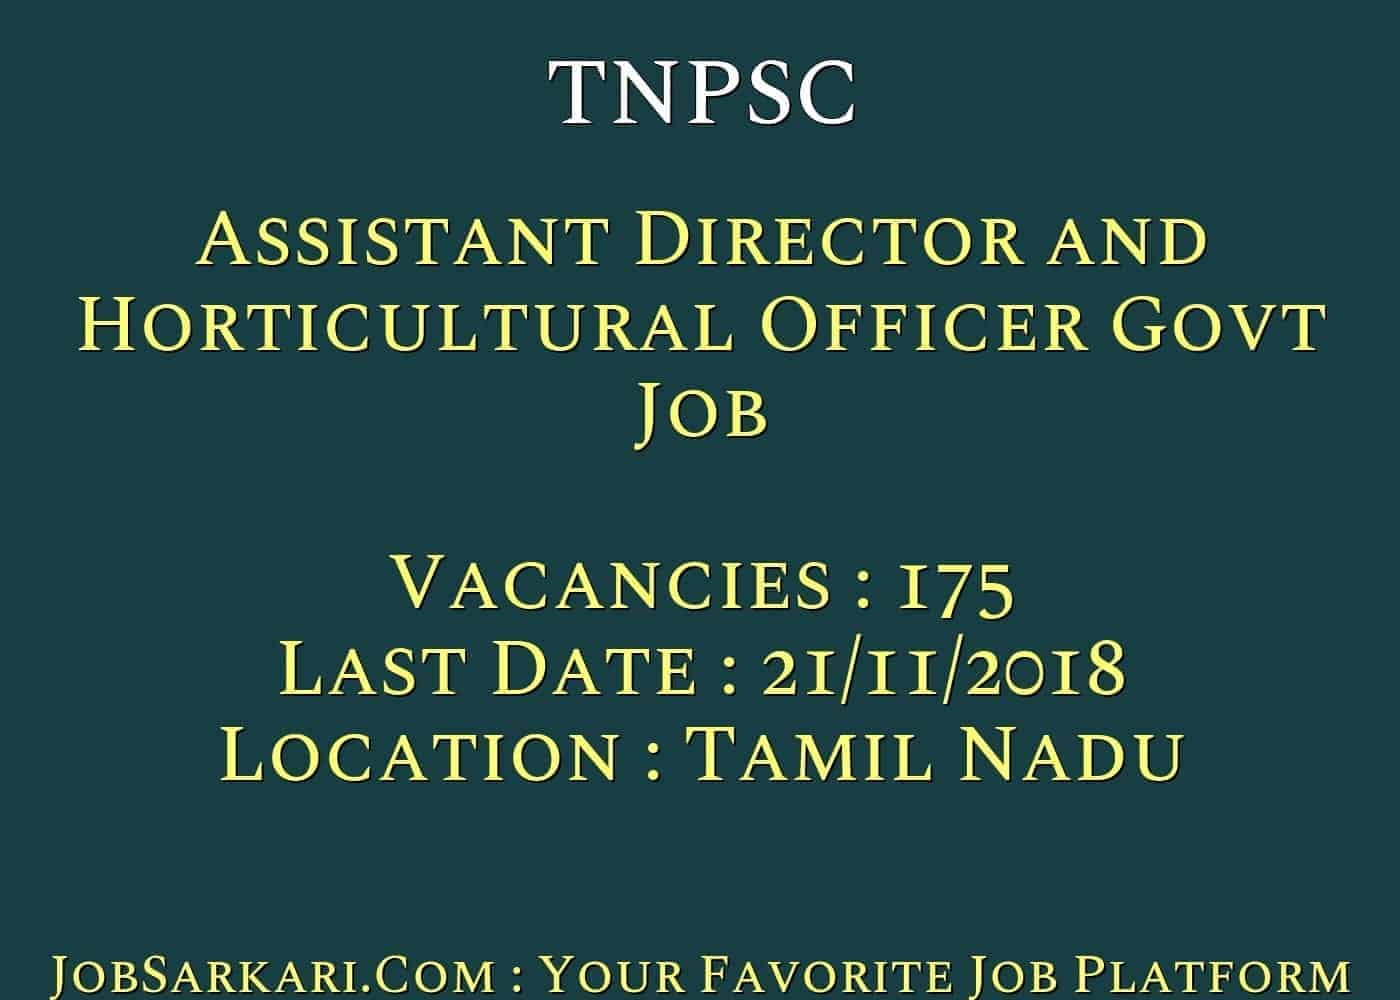 TNPSC Recruitment 2018 for Assistant Director and Horticultural Officer Govt Job